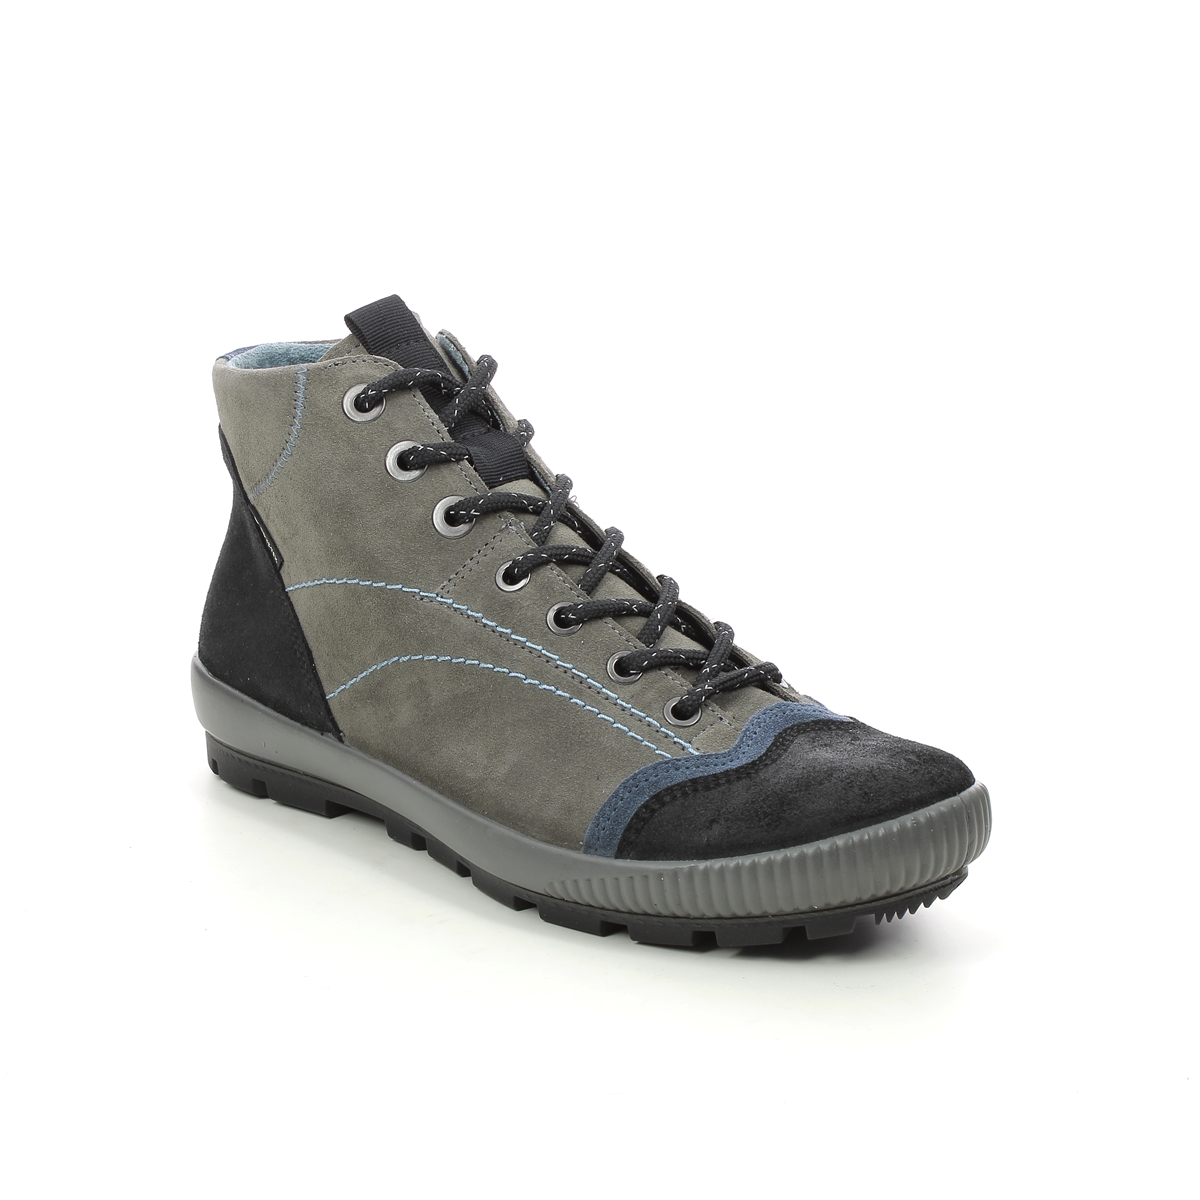 Legero Tanaro Gtx Trek Grey Suede Womens walking boots 2000123-2800